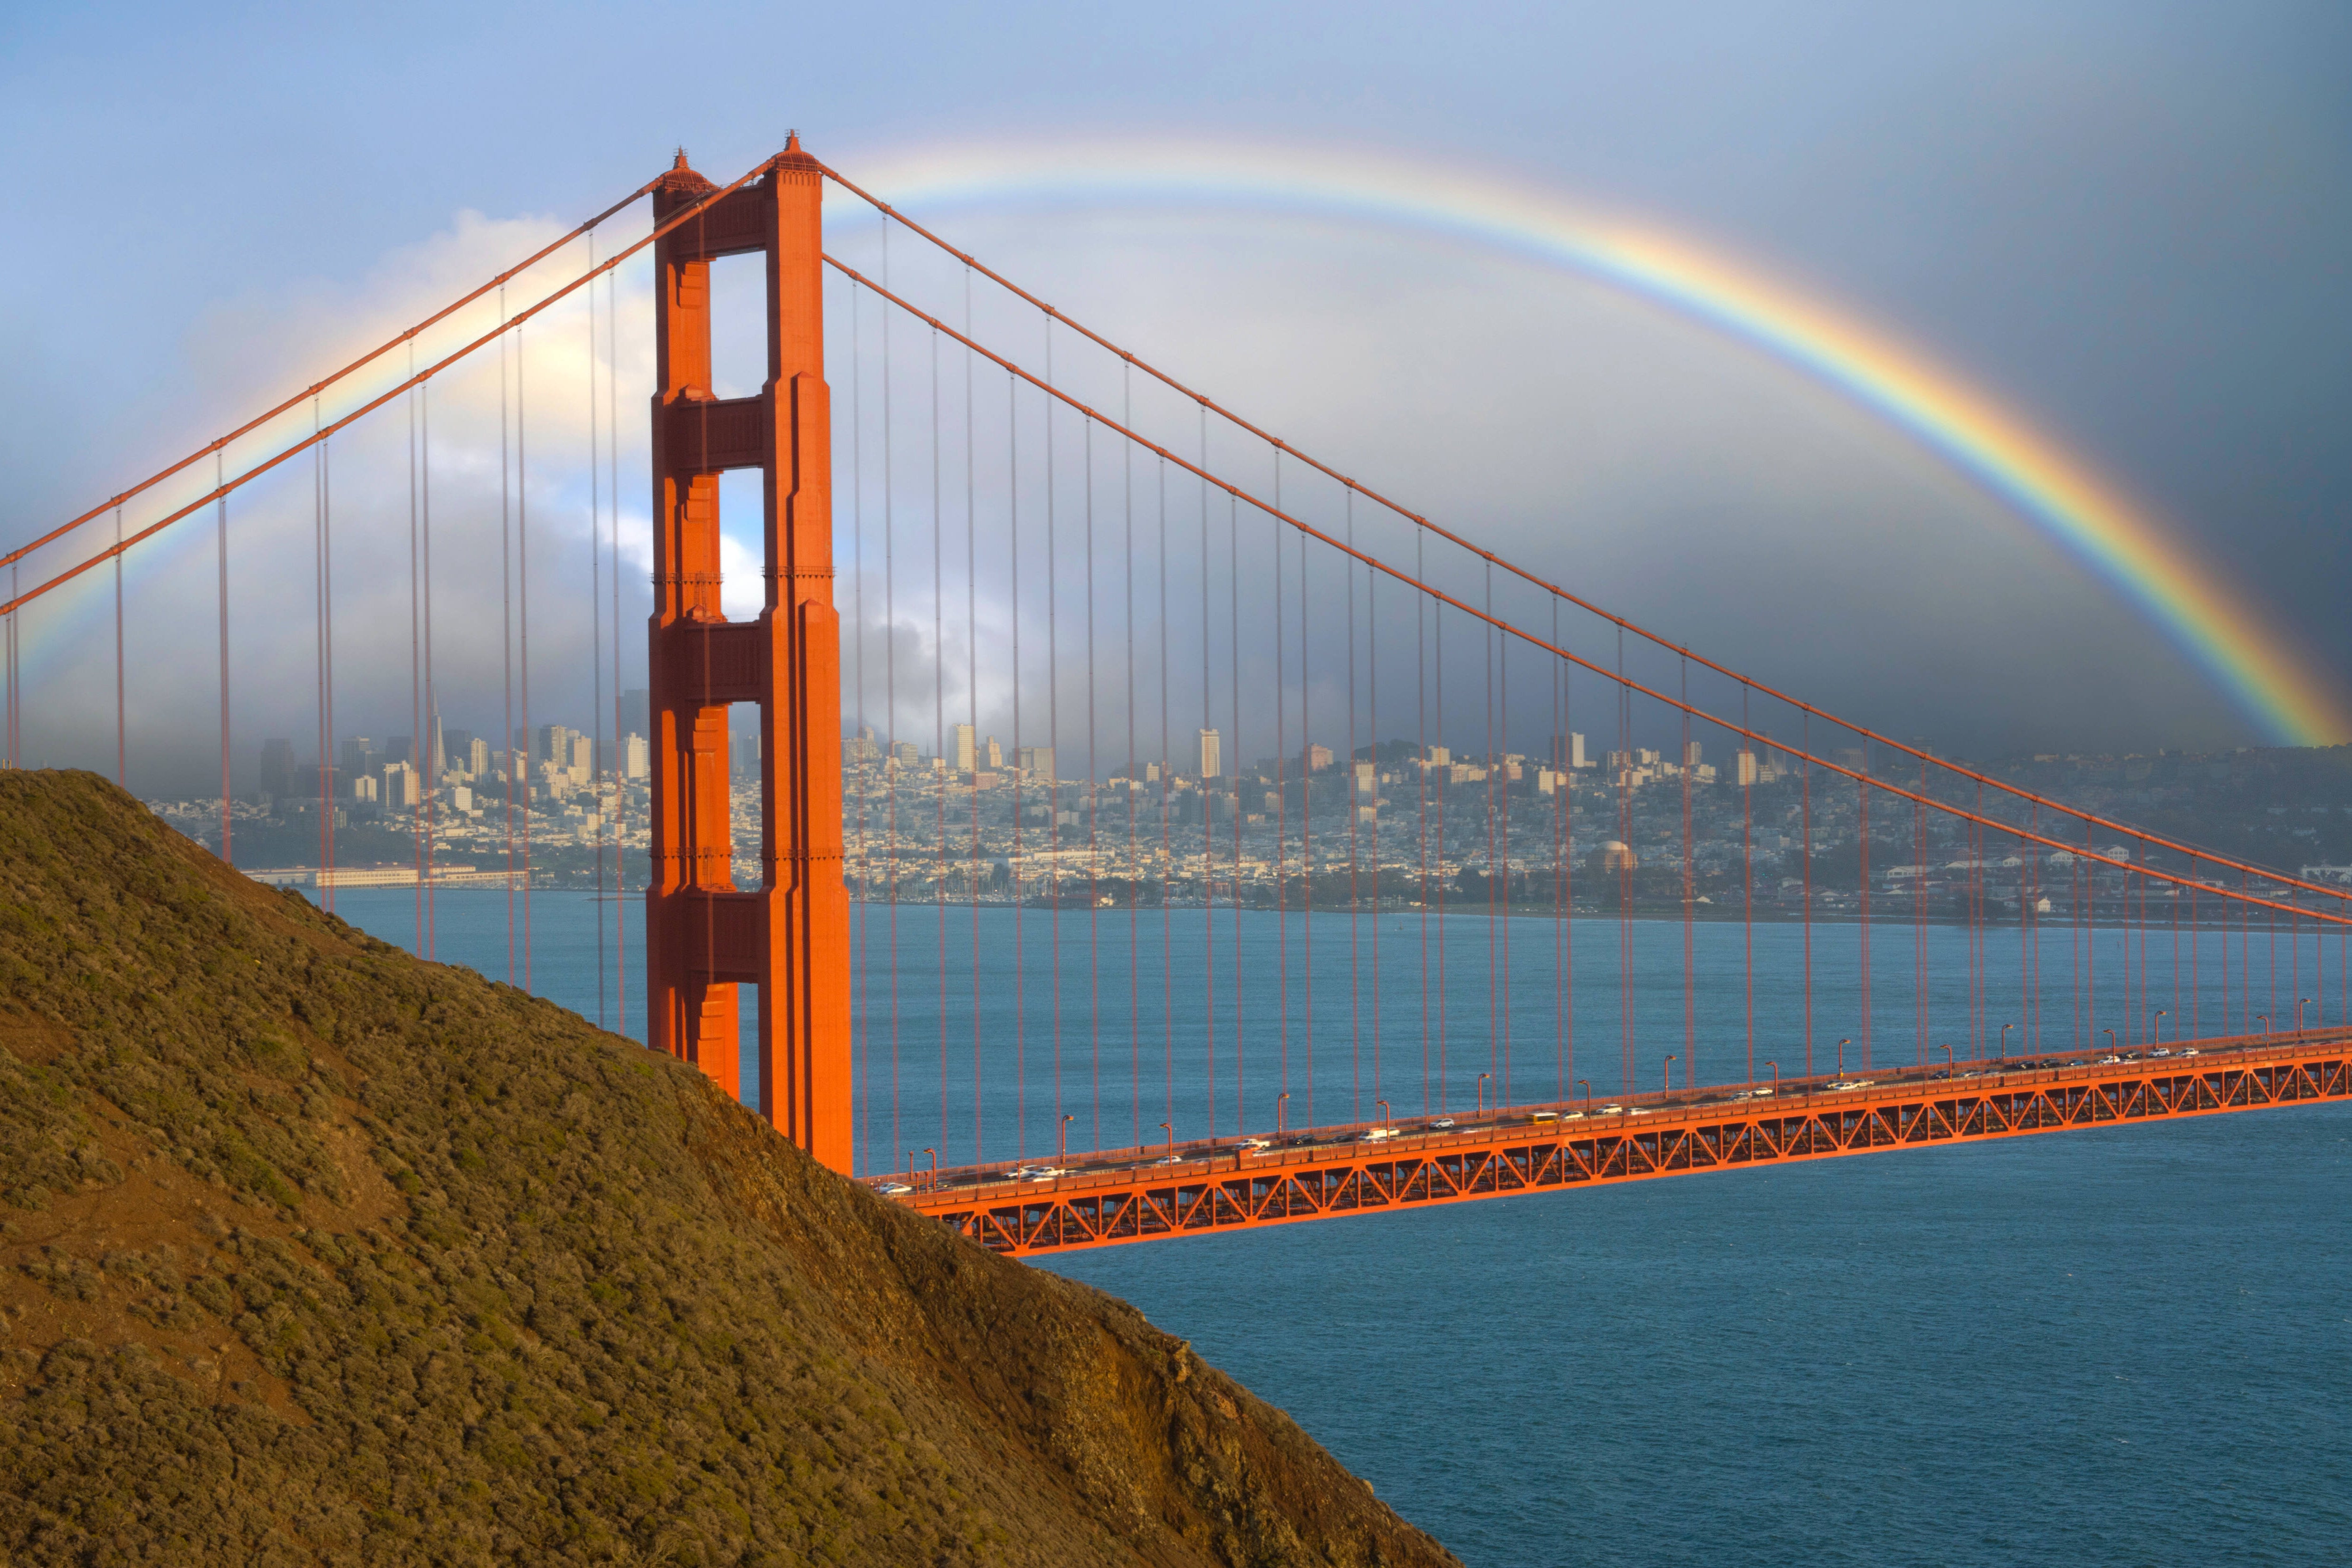 A rainbow over the Golden Gate Bridge.